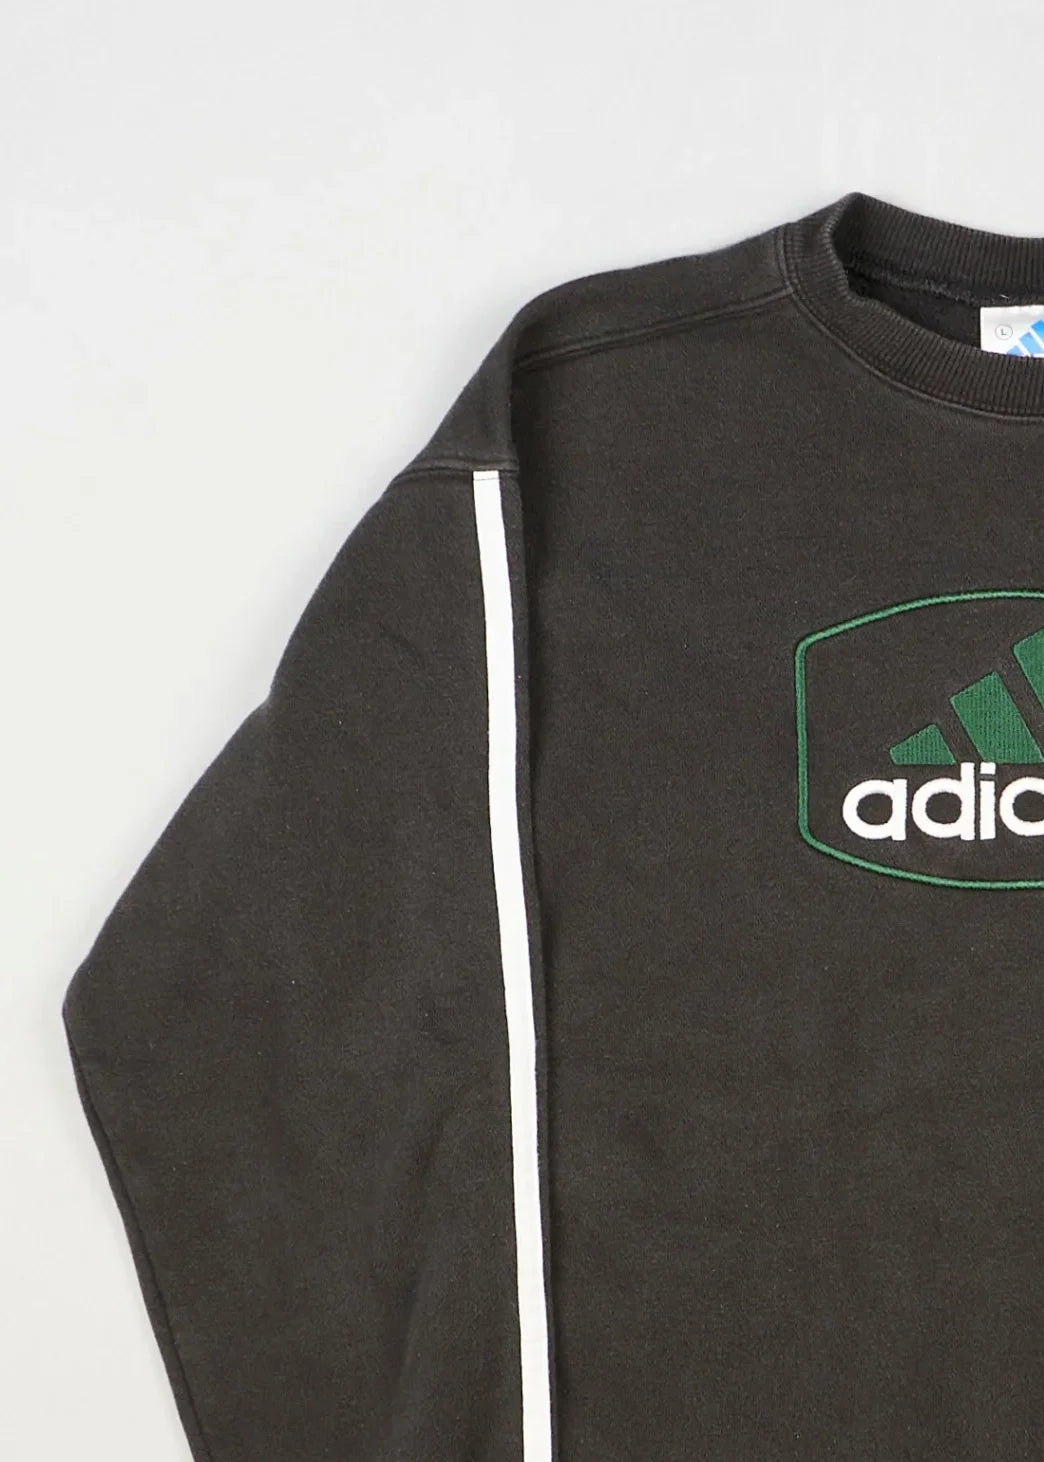 Adidas - Sweatshirt (S) Left